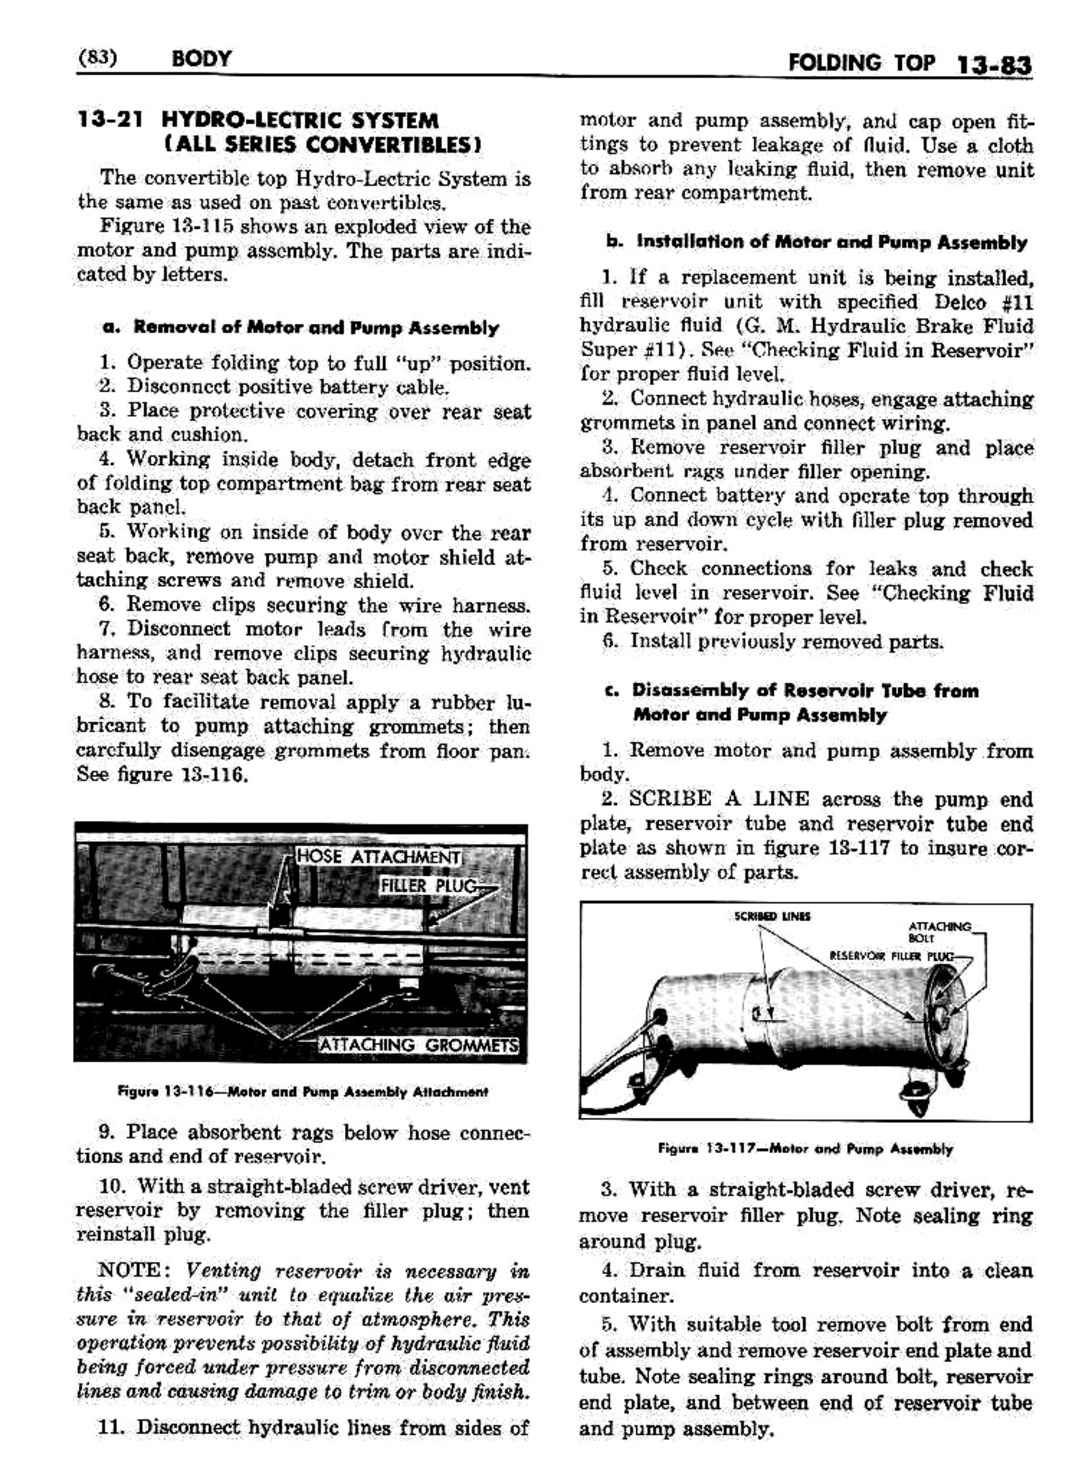 n_1958 Buick Body Service Manual-084-084.jpg